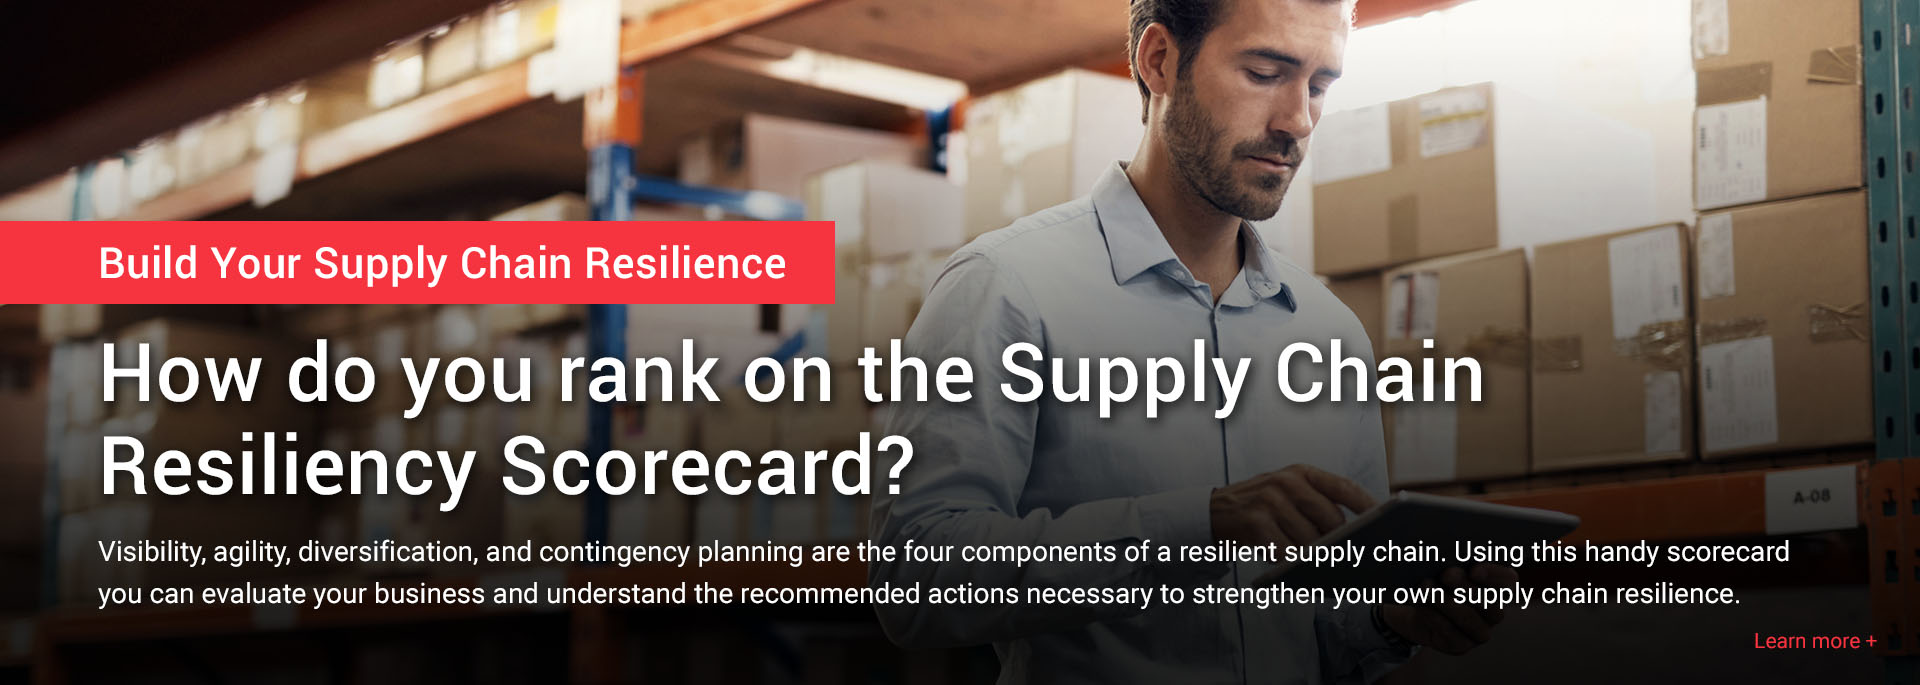 How do you rank on the Supply Chain Scorecard?